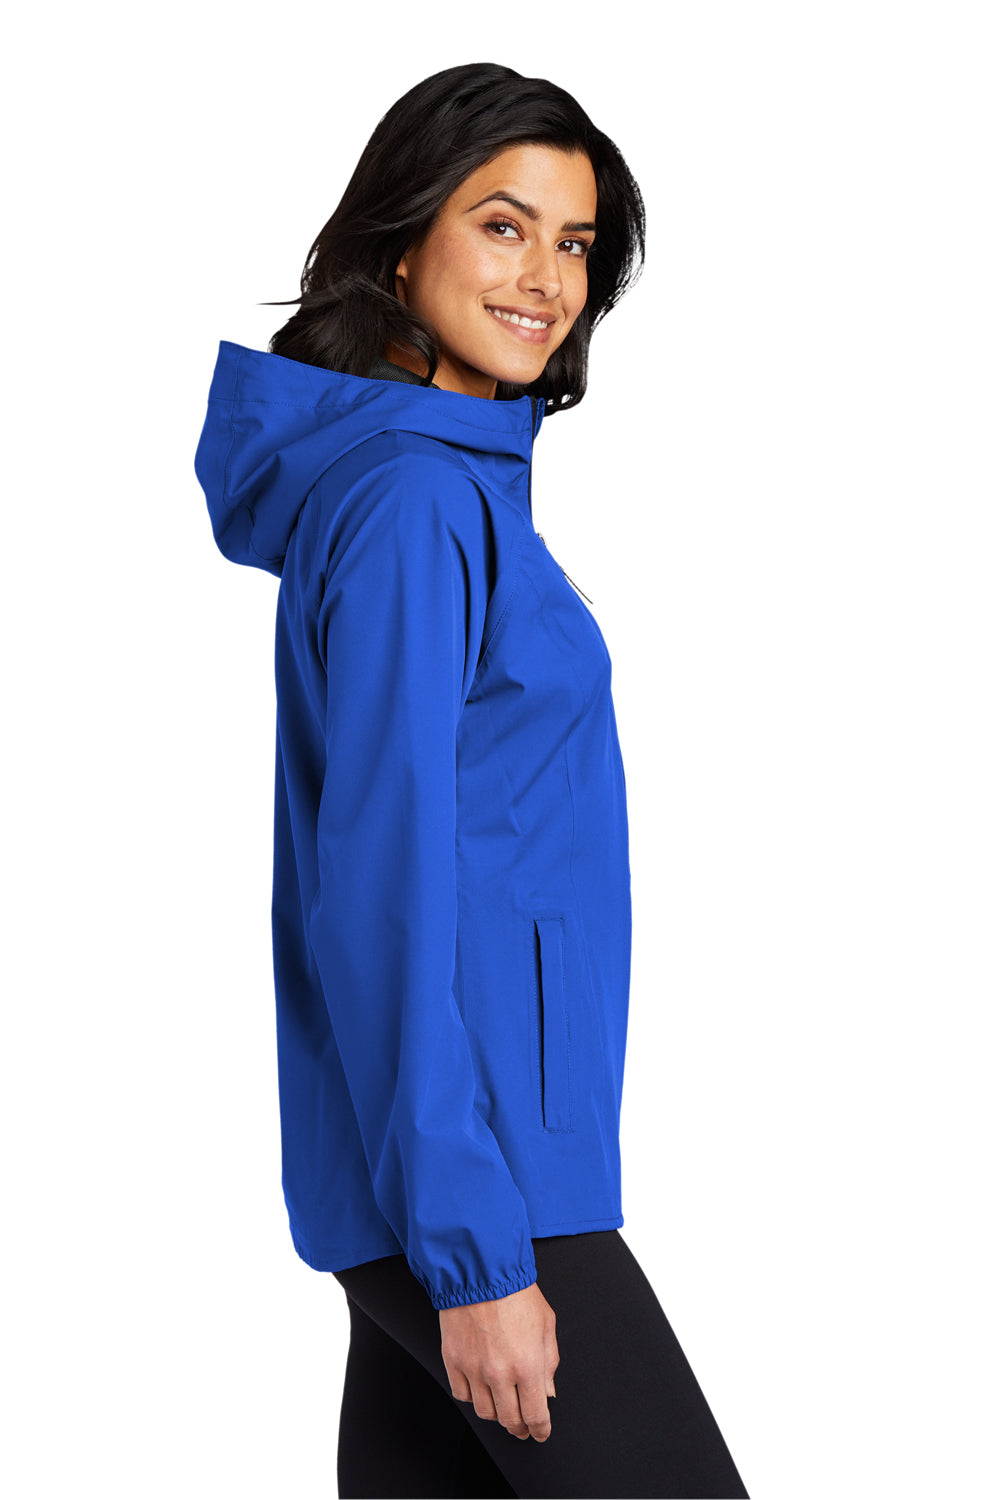 Port Authority Womens Essential Full Zip Hooded Rain Jacket True Royal Blue Side